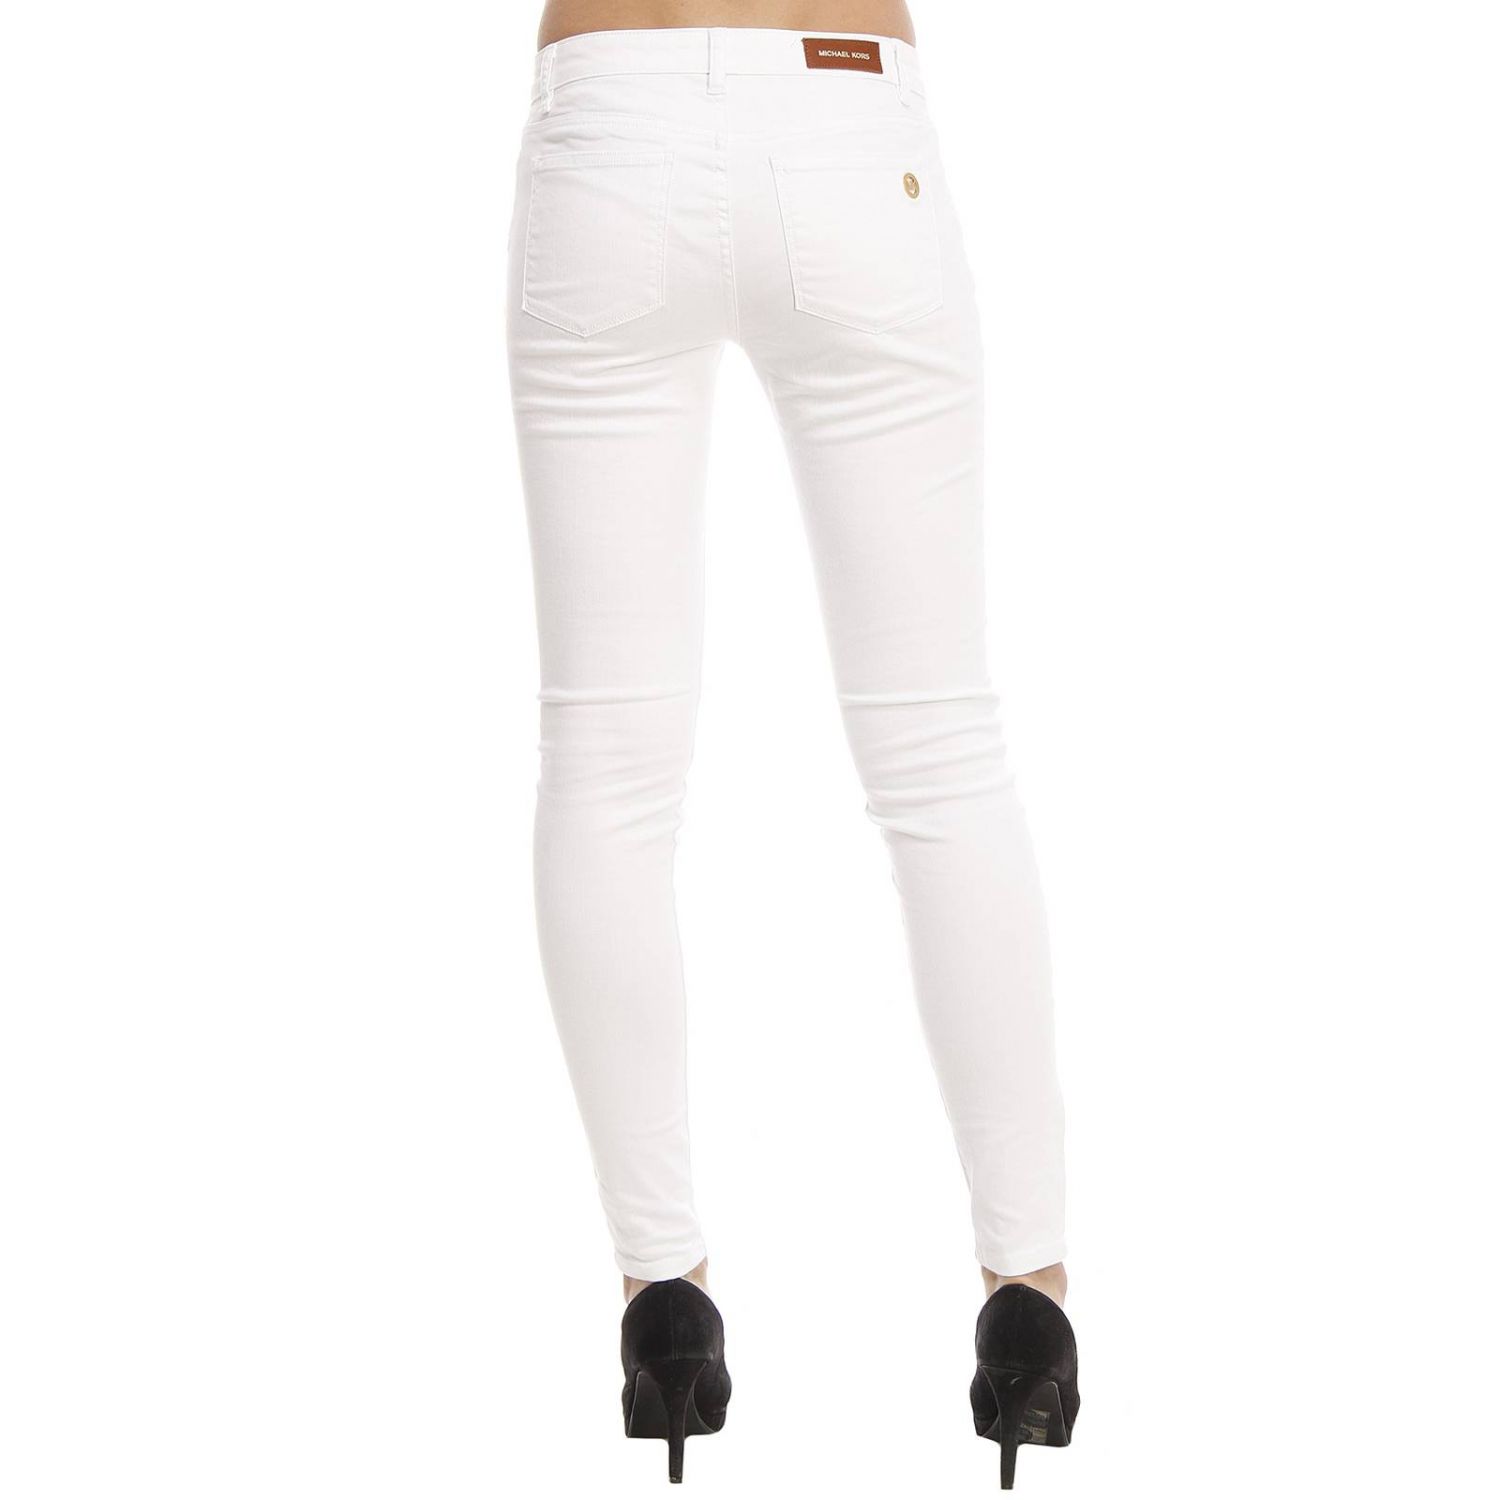 white michael kors jeans